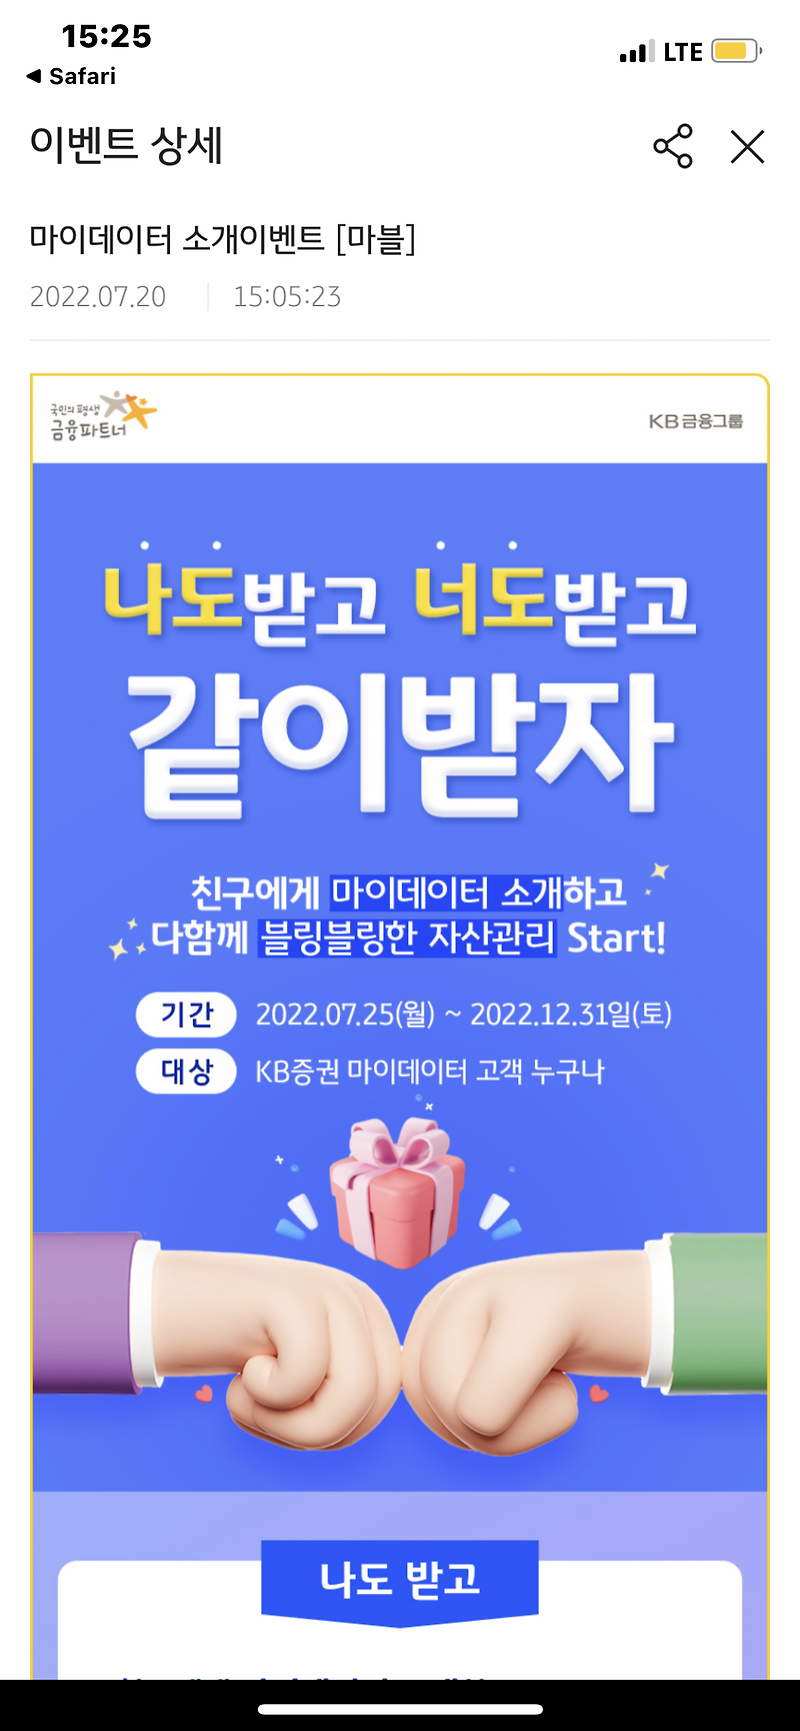 KB증권 마이데이터 소개 이벤트 애플워치7, 스타벅스 아메리카노